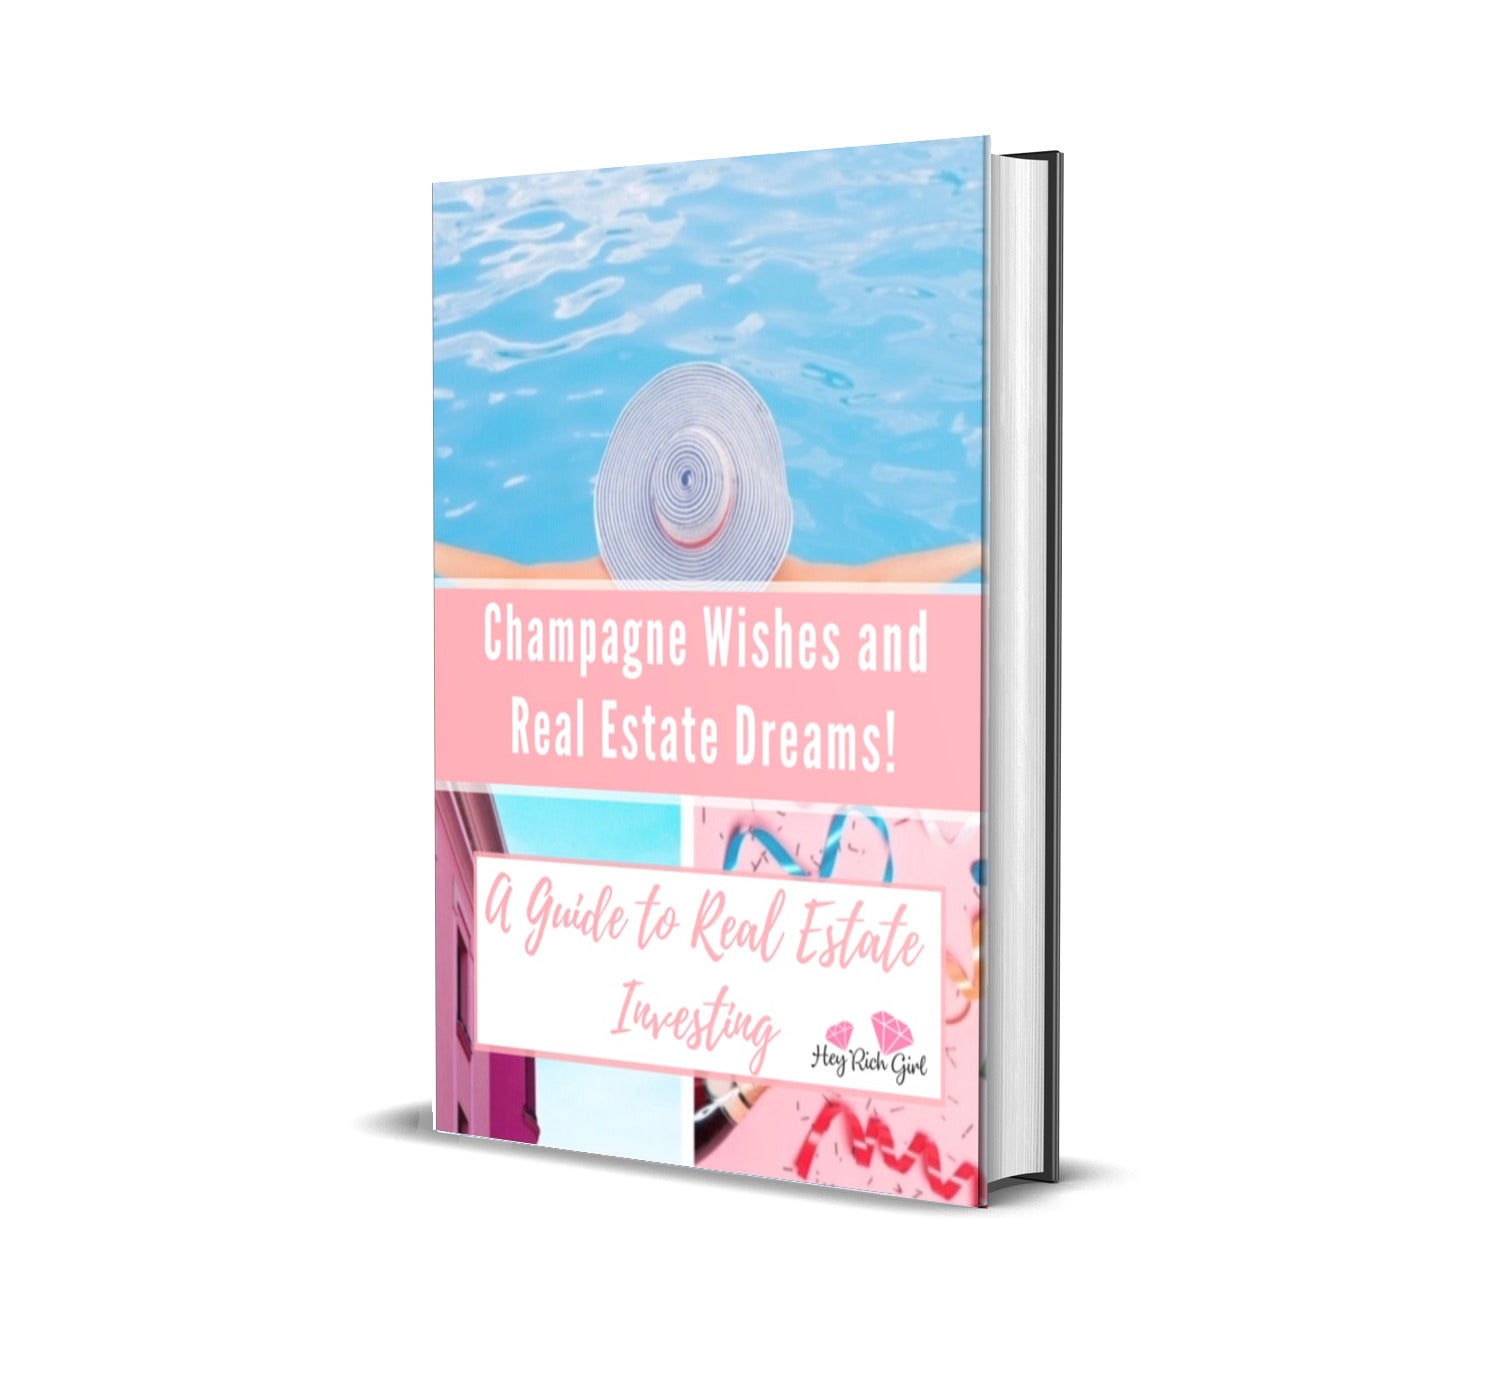 Champagne Wishes And Real Estate Dreams e-book